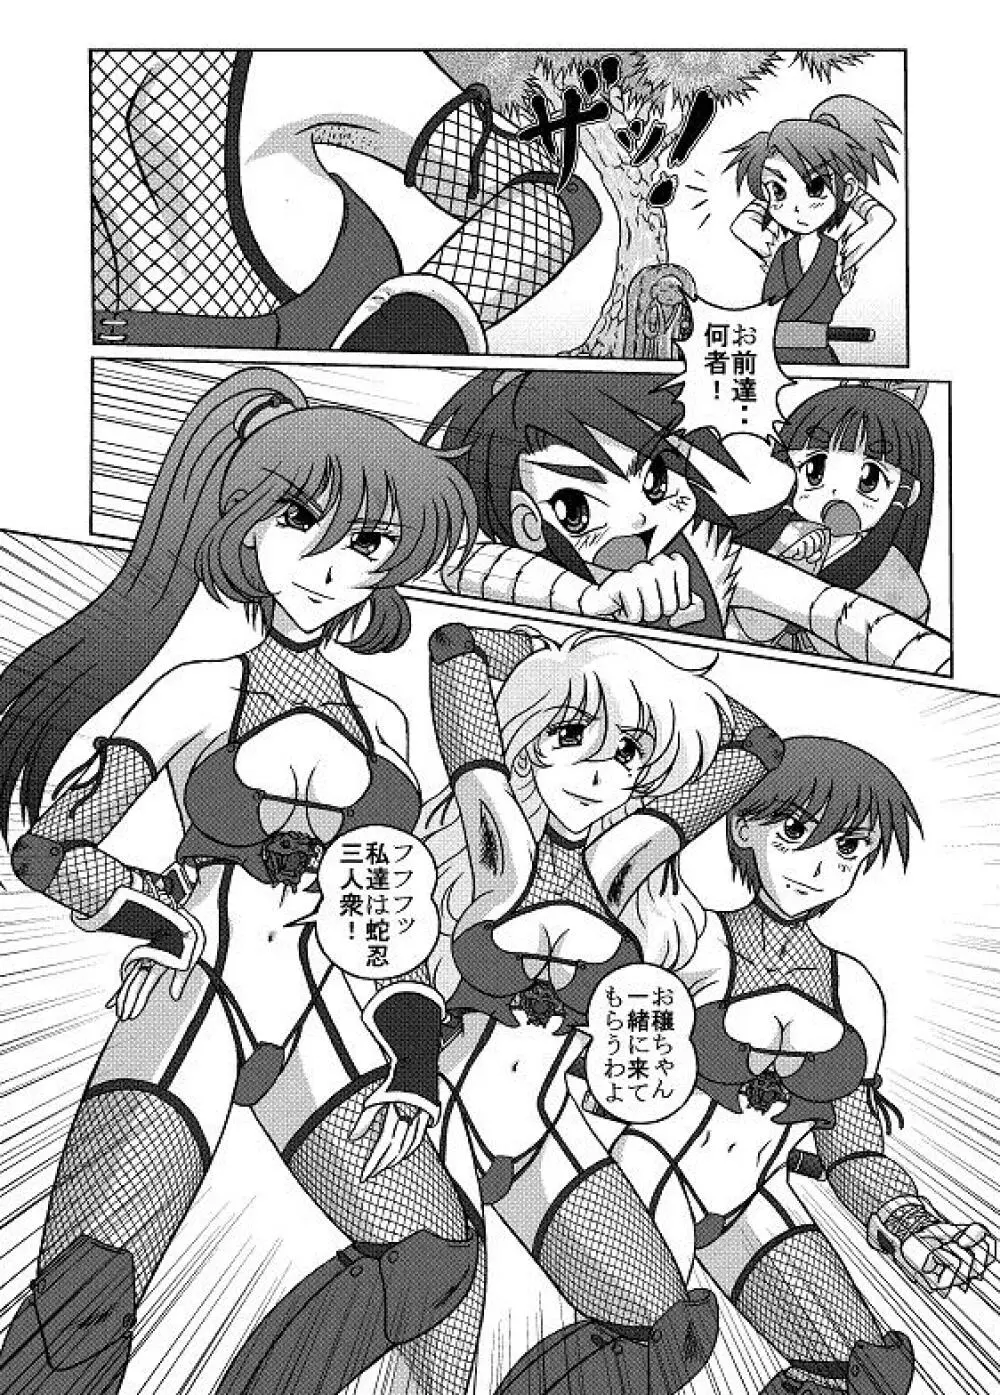 Same-themed manga about kid fighting female ninjas from japanese imageboard. 34ページ